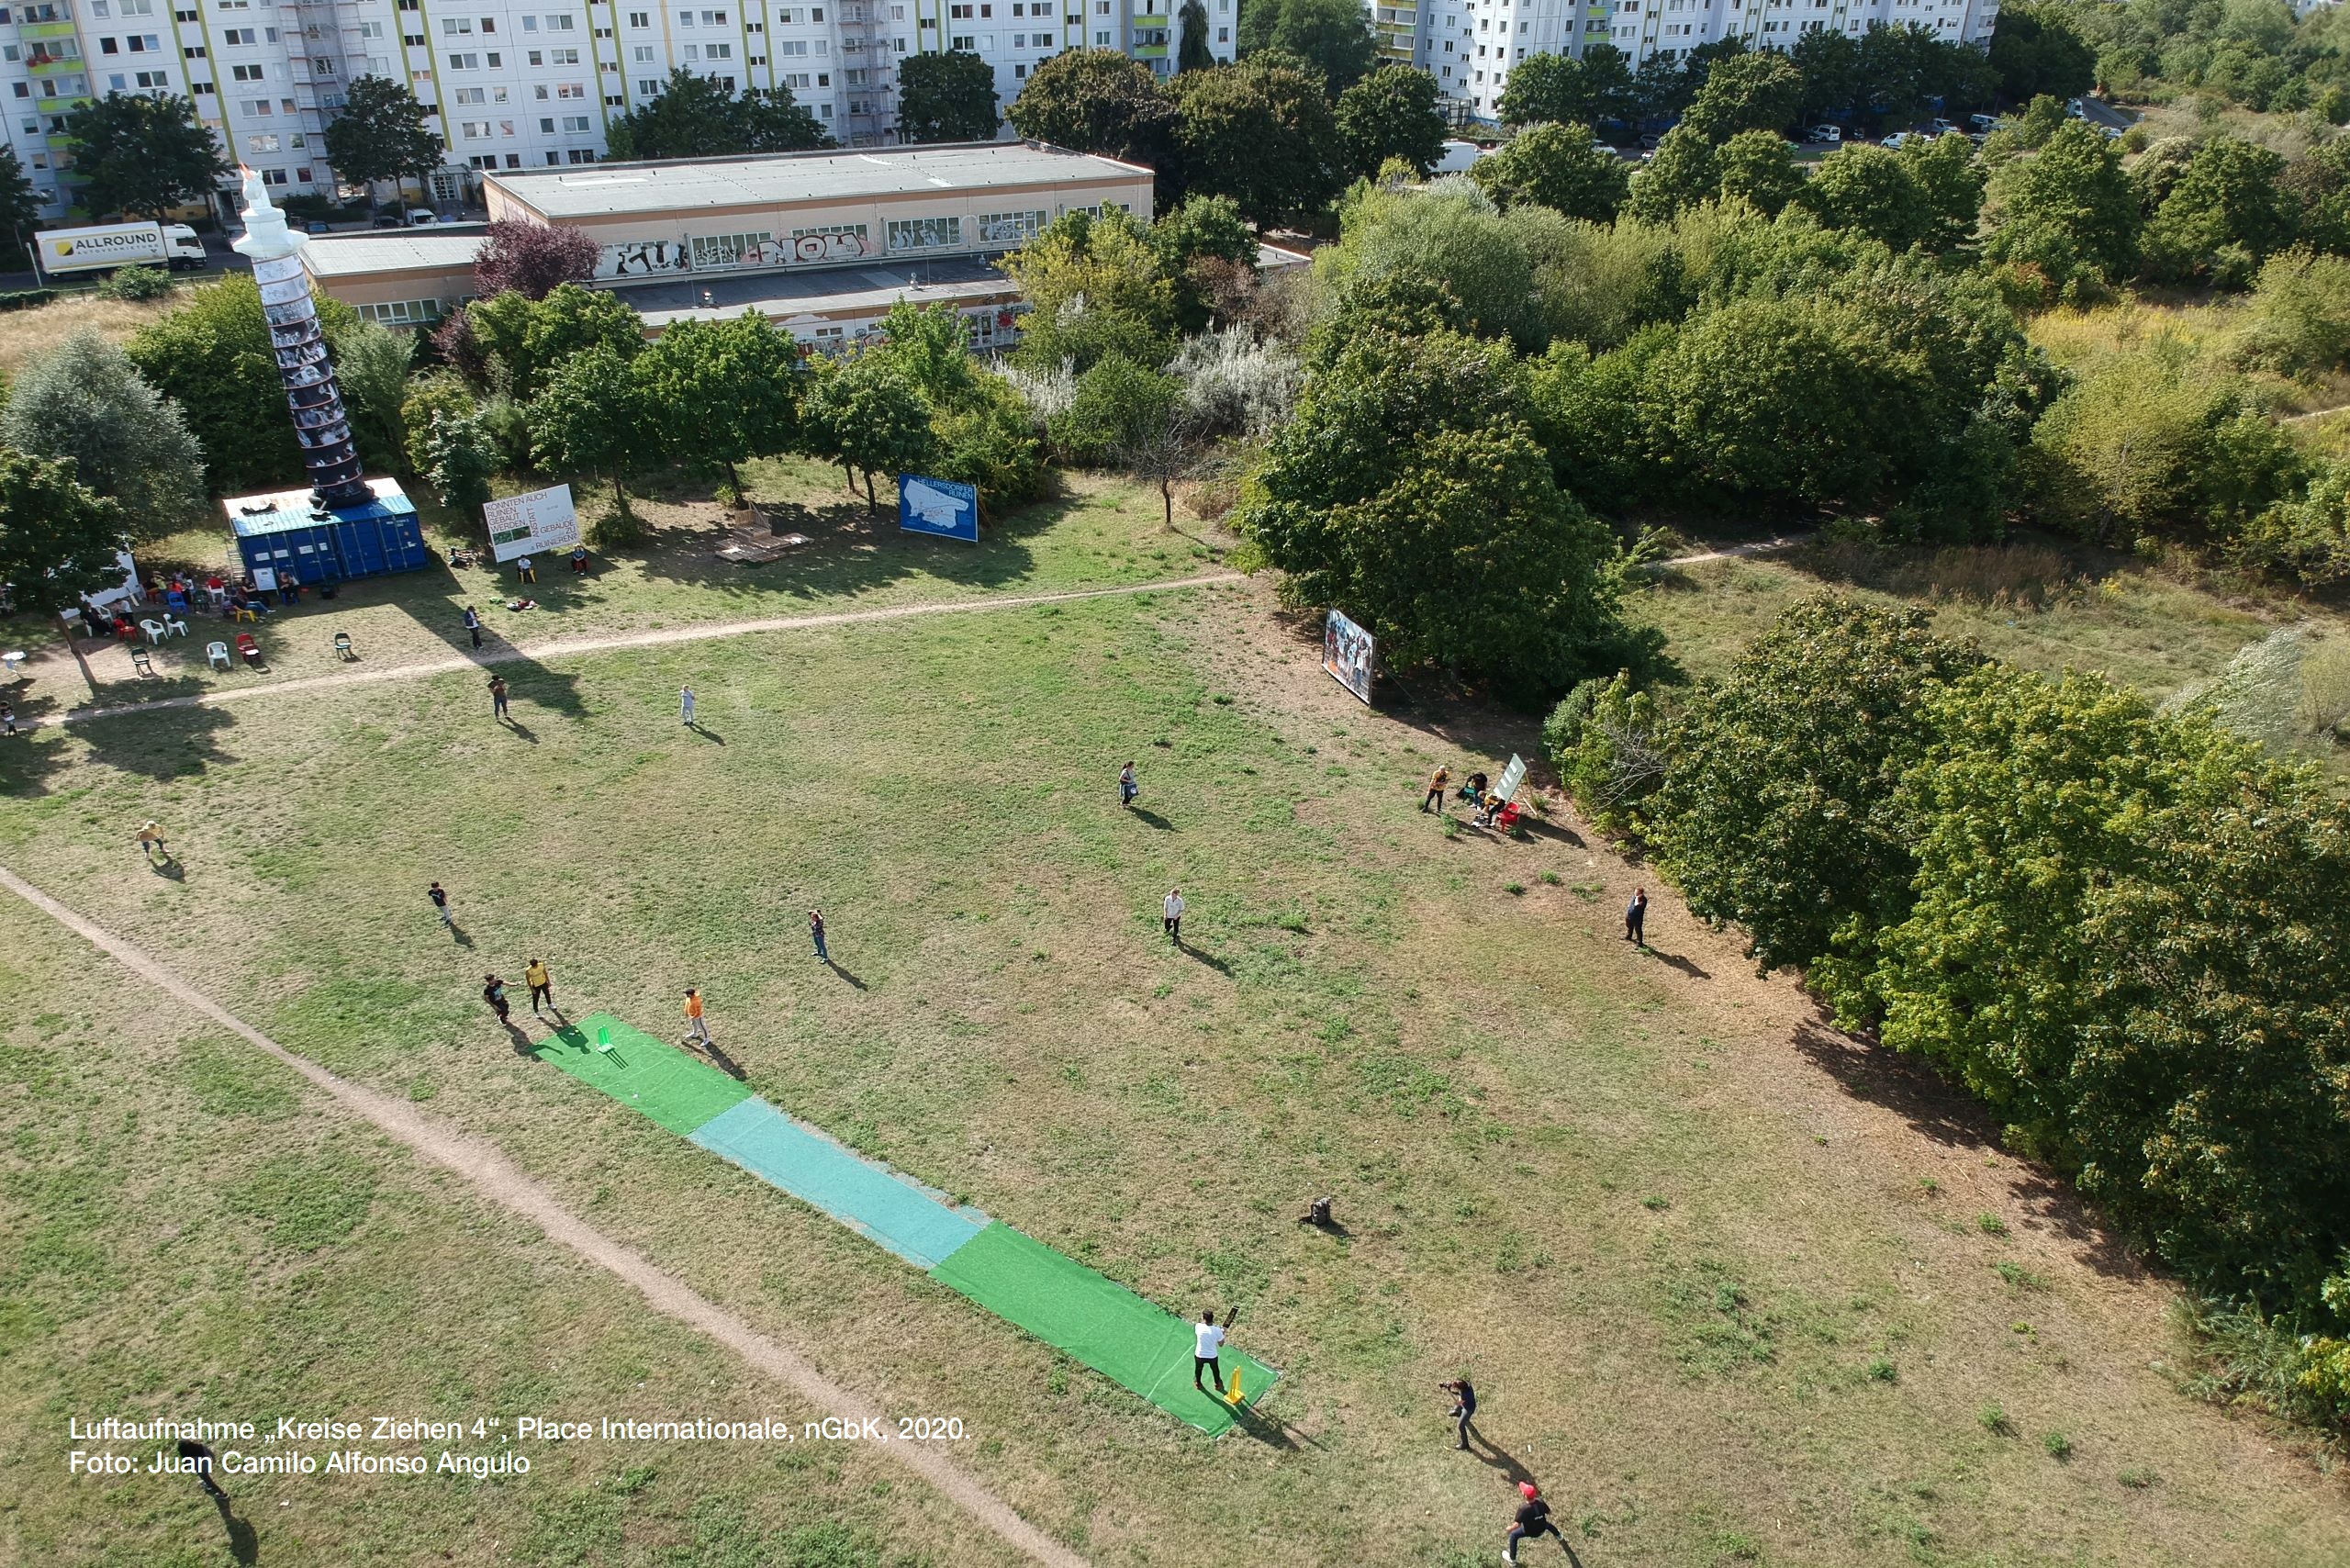 Luftaufnahme „Kreise Ziehen 4“, Place Internationale, nGbK, 2020. Foto: Juan Camilo Alfonso Angulo